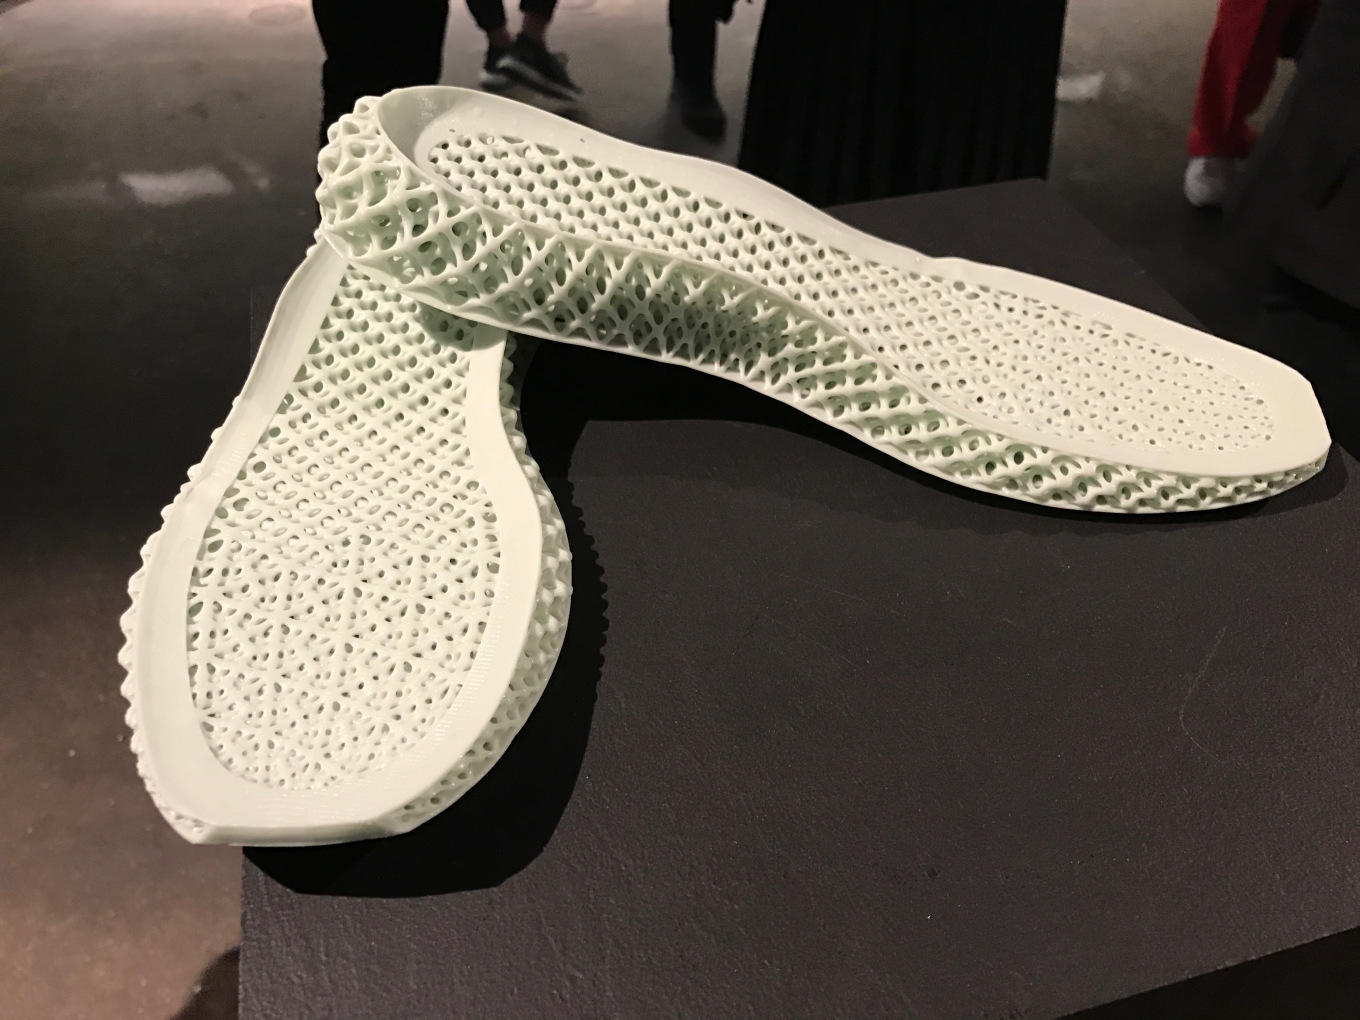 Technavio发布国际3D打印鞋关键公司 匹克成为唯一一家被列入的中国公司